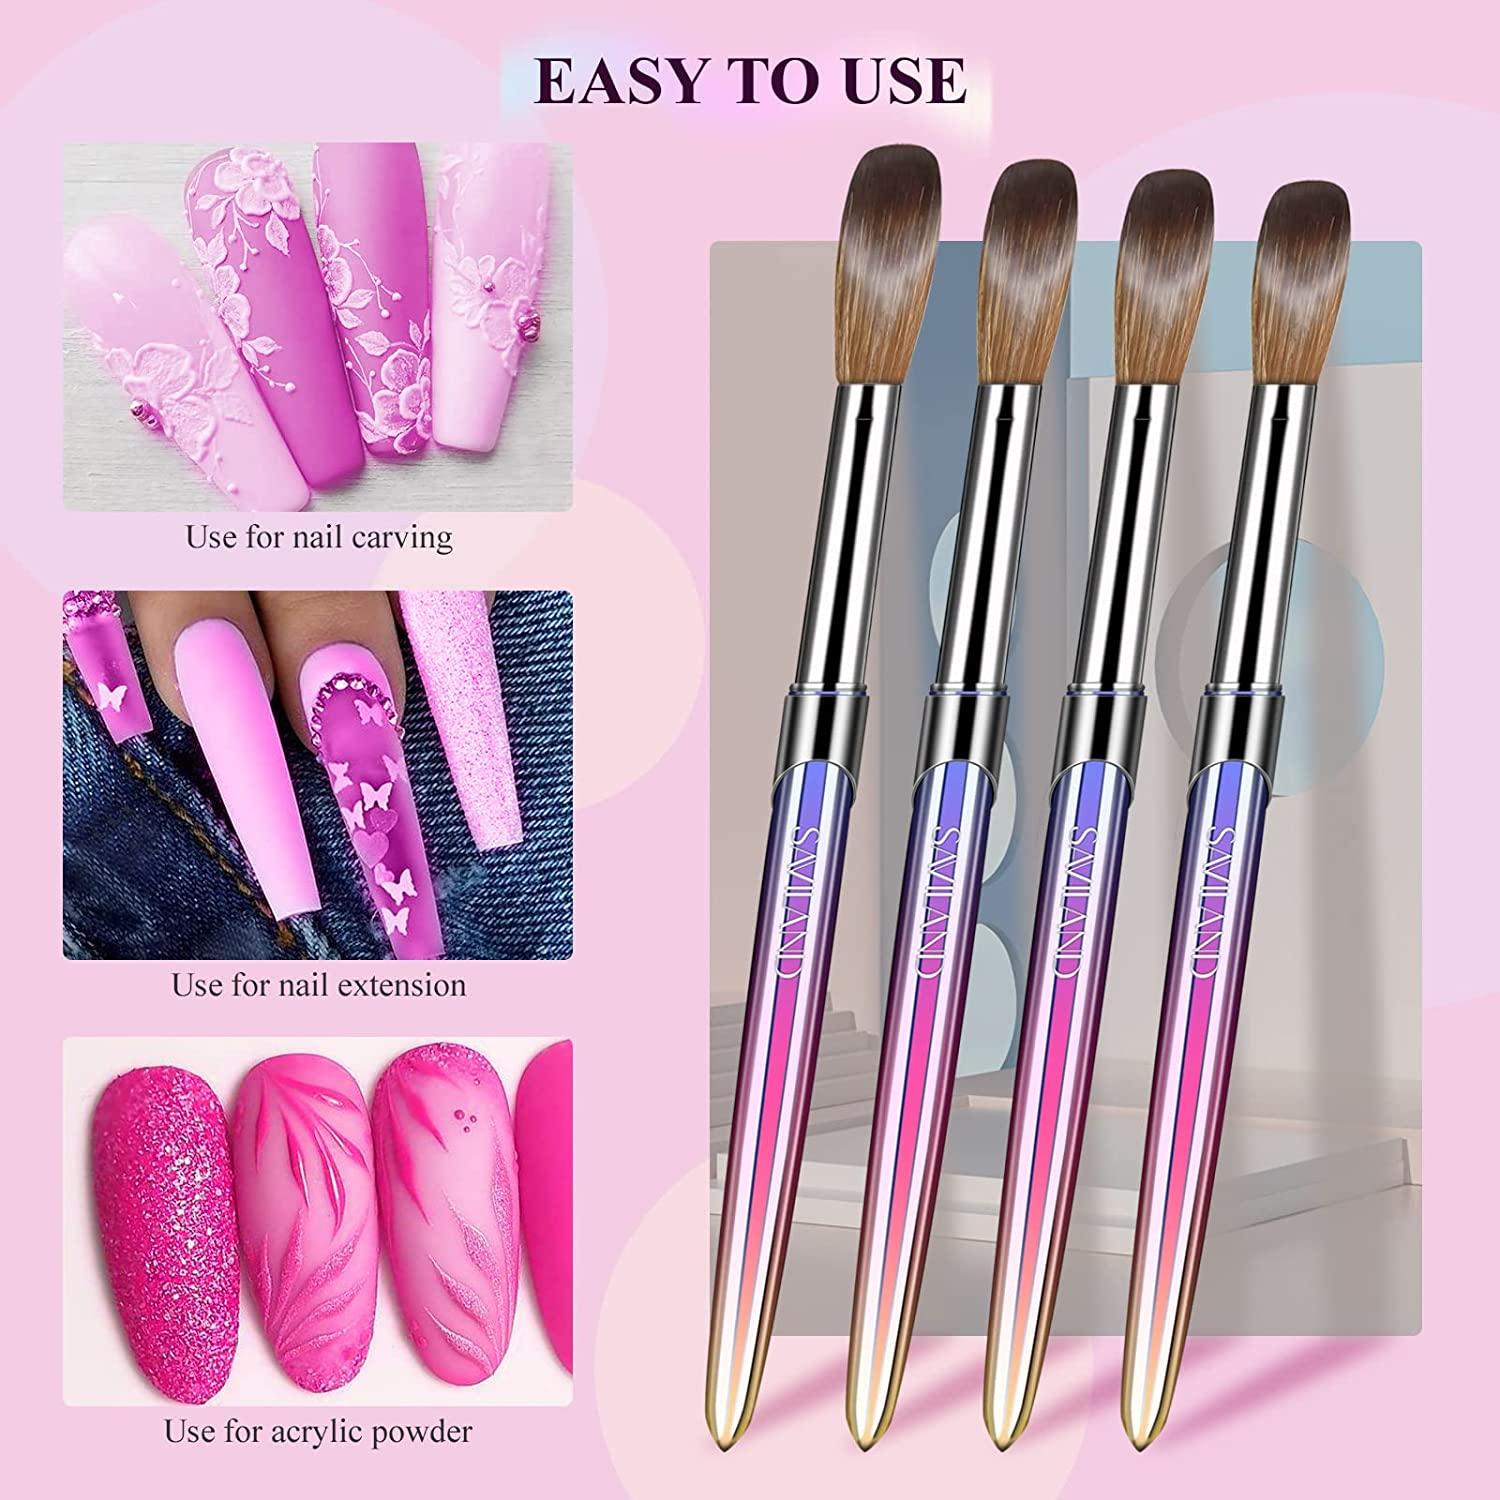 Women's Saviland 3pcs Acrylic Nail Brush Set - Professional Acrylic Nail Brushes for Acrylic Application, Size 12 Acrylic Nail Brush for Nails